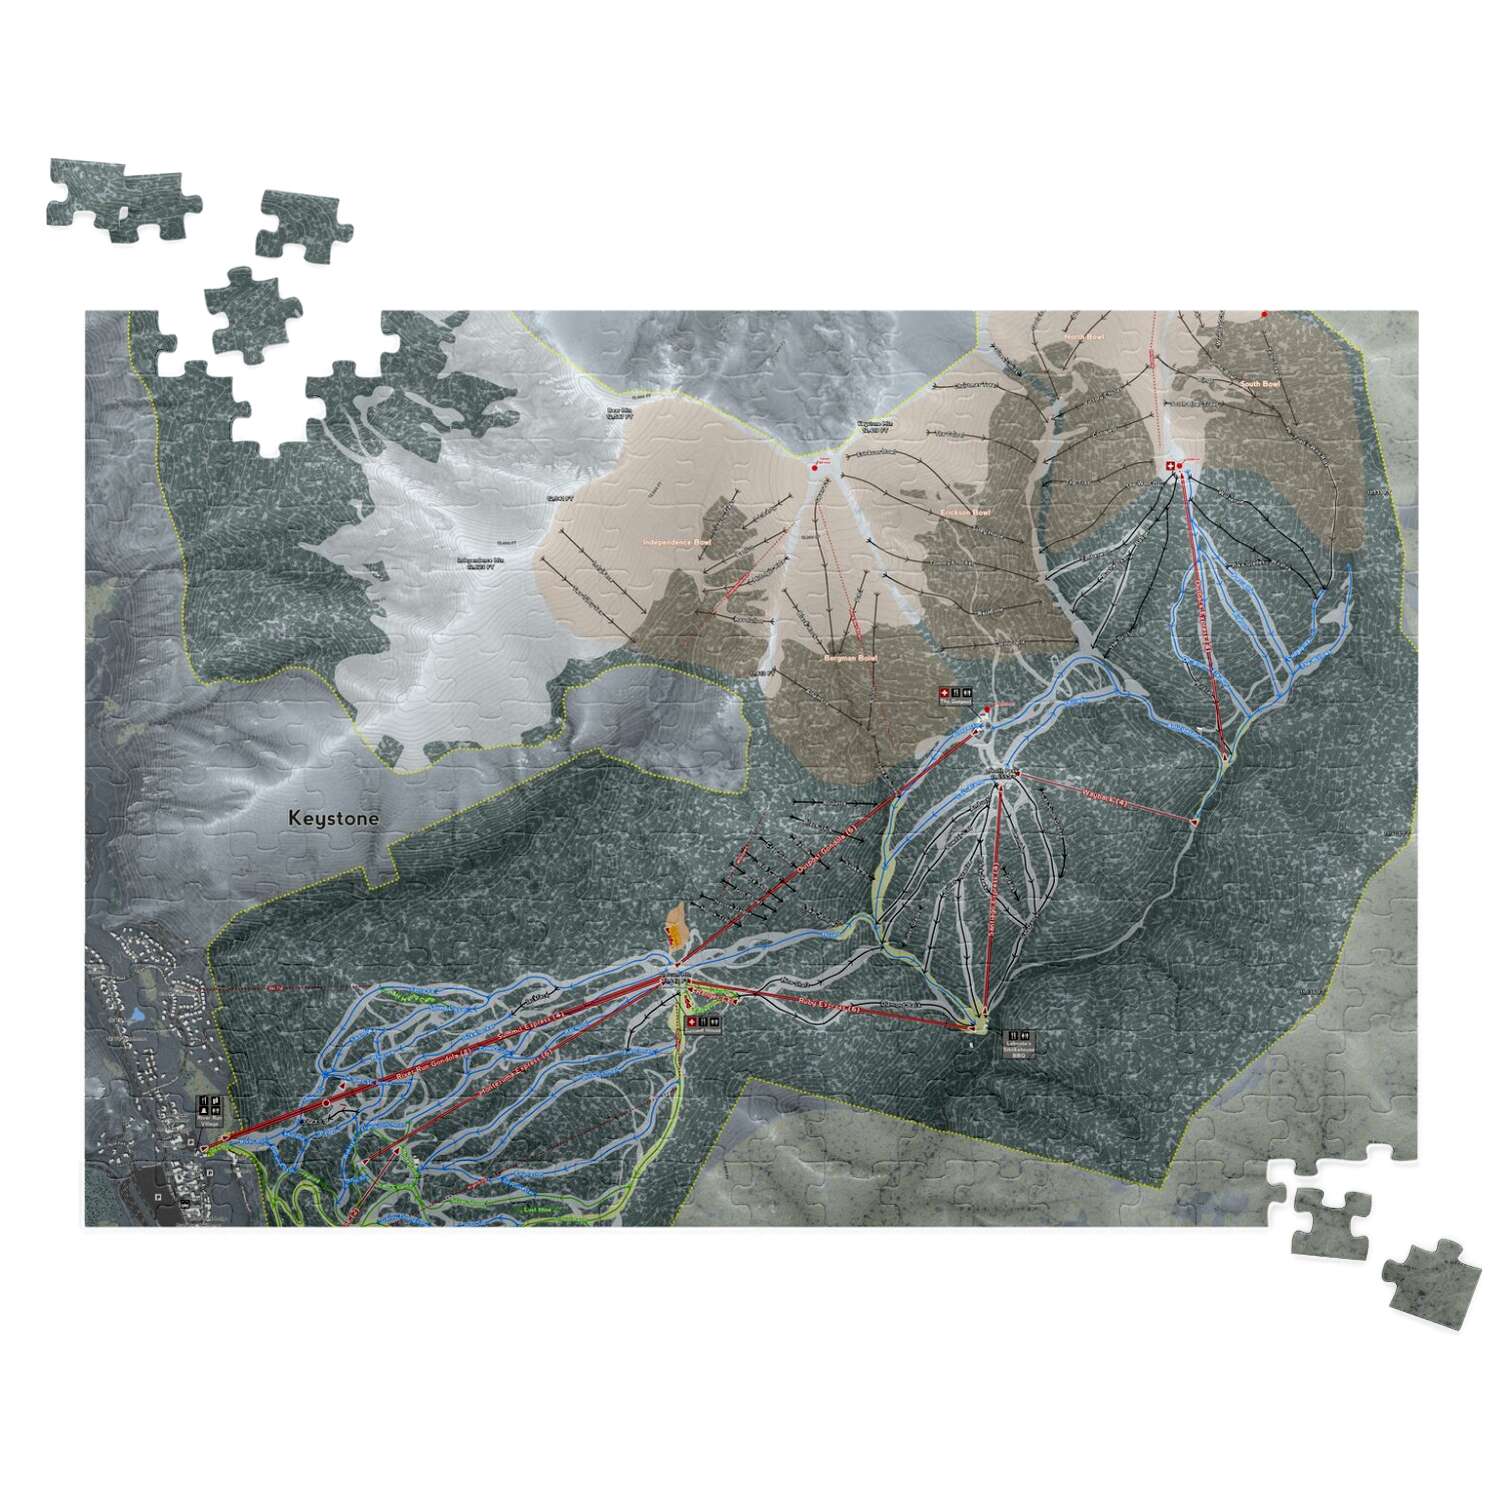 Keystone, Colorado Ski Trail Map Puzzle - Powderaddicts